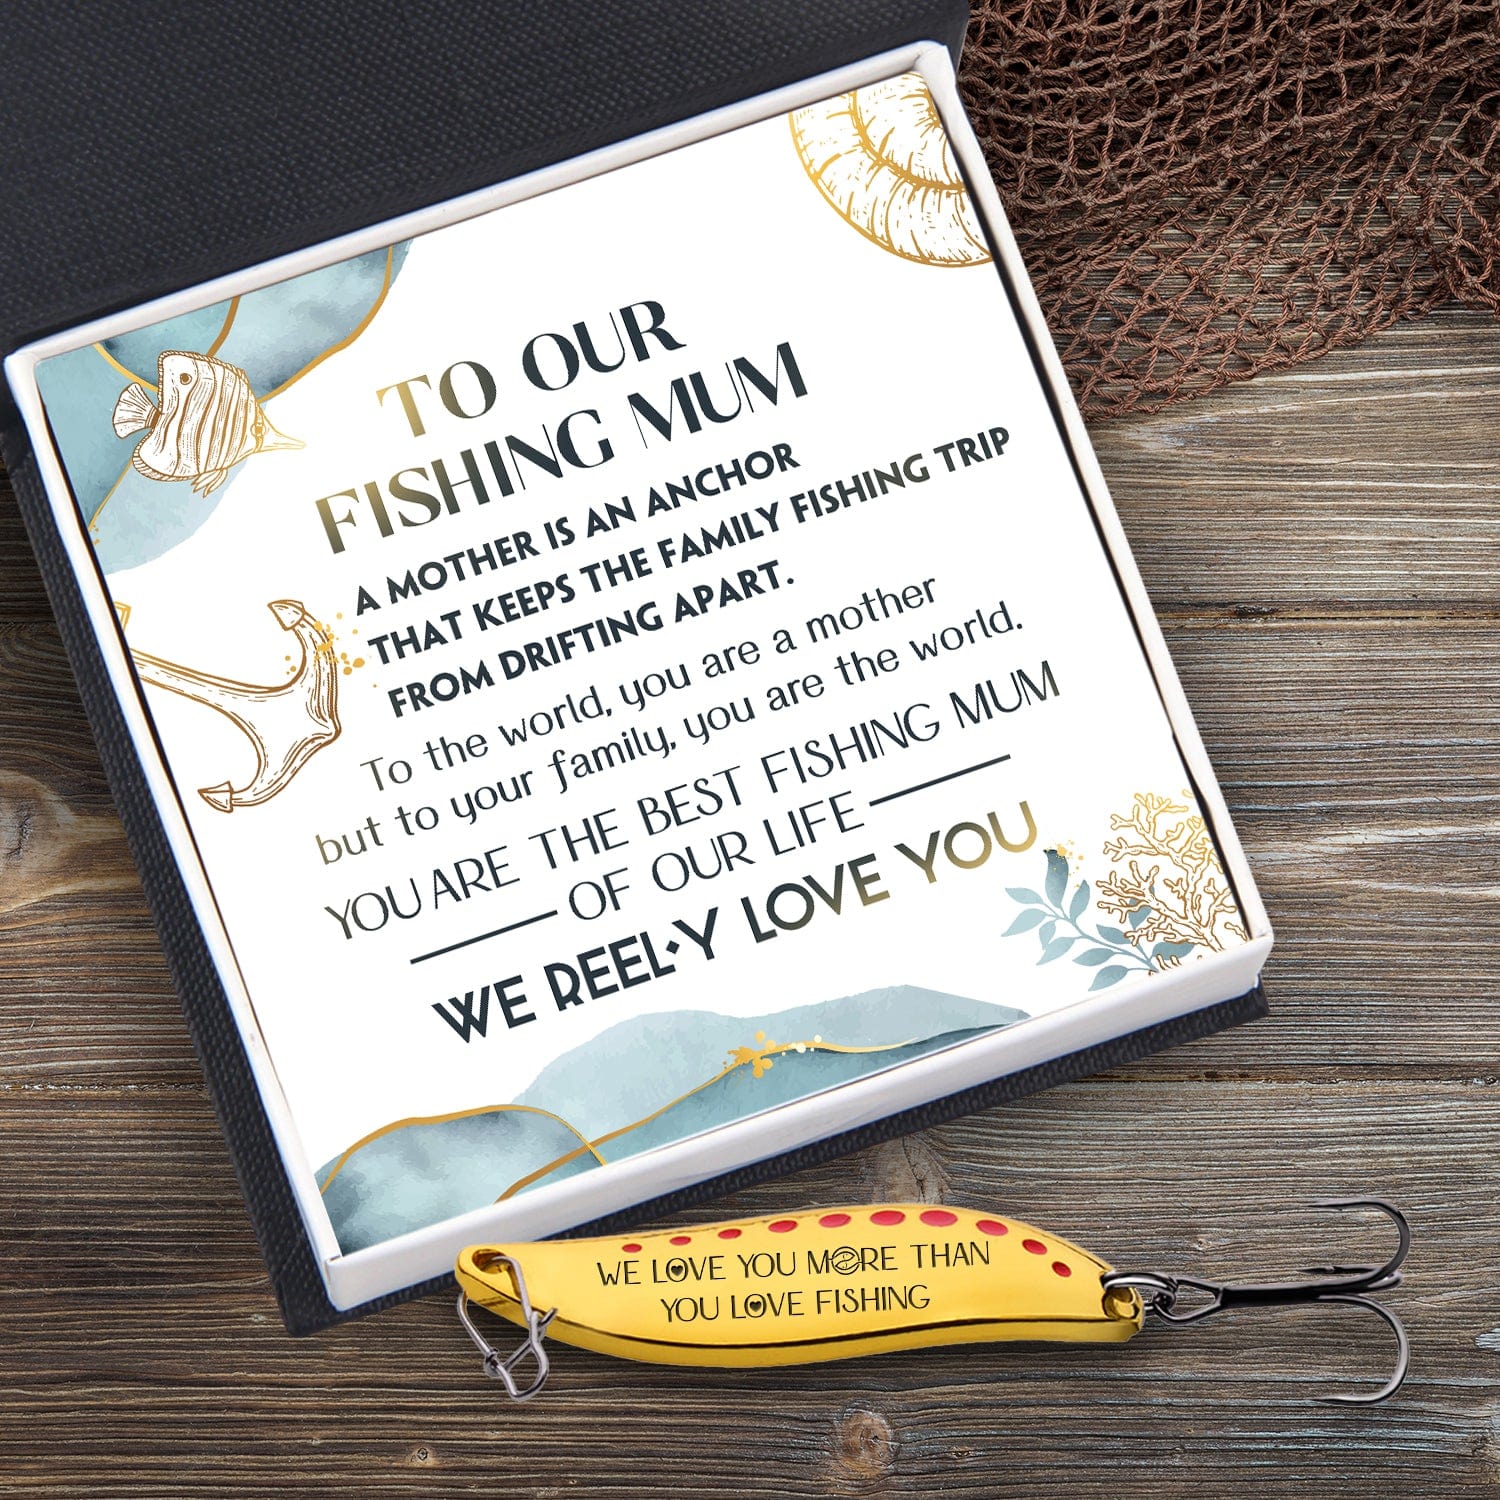 Fishing Spoon Lure - Fishing - To Our Mum - We Reel-y Love You - Gfaa19004